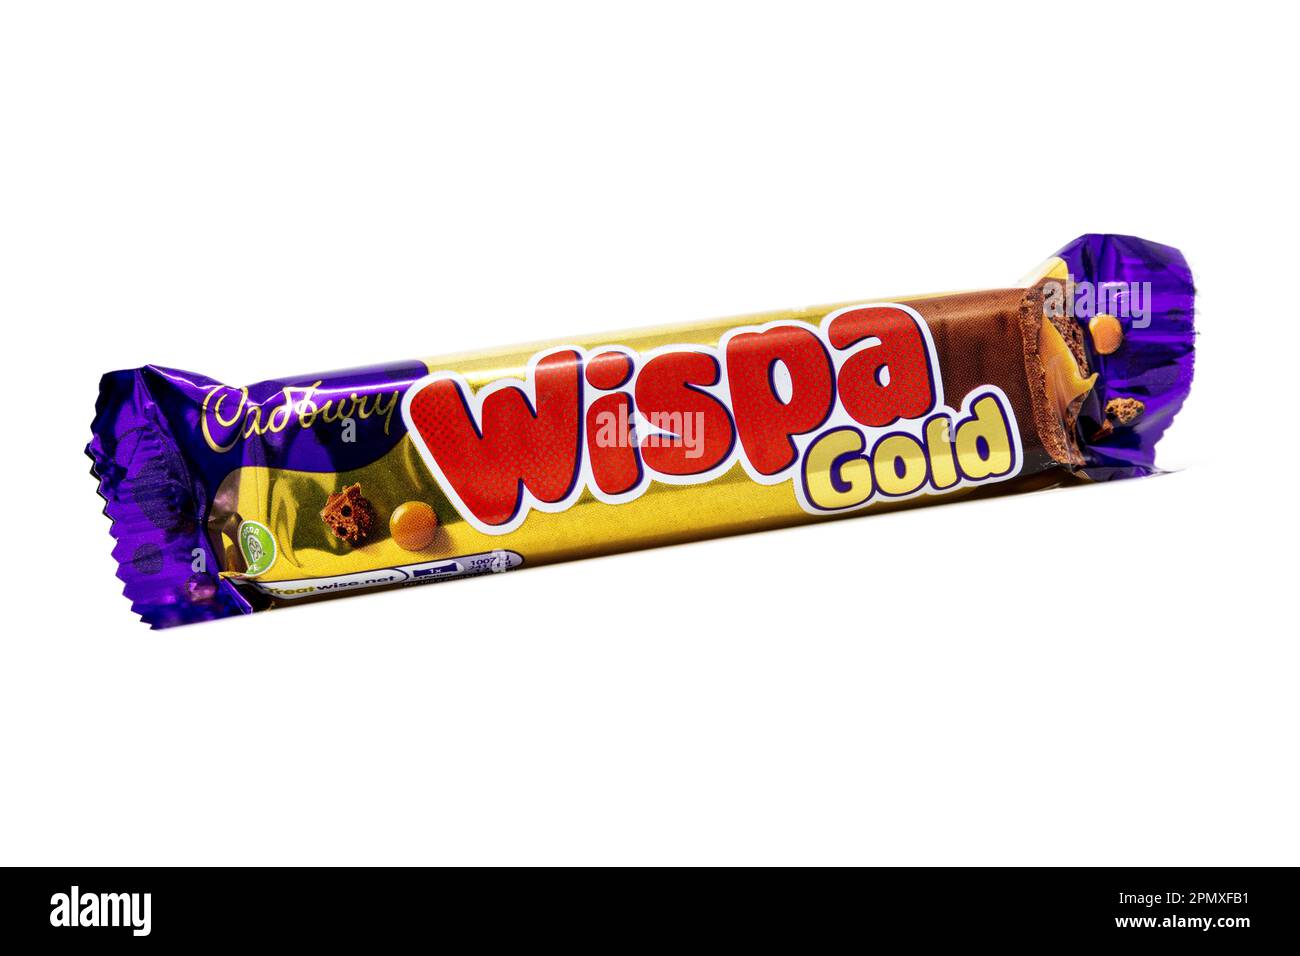 Cadbury Wispa Gold Bar Stock Photo